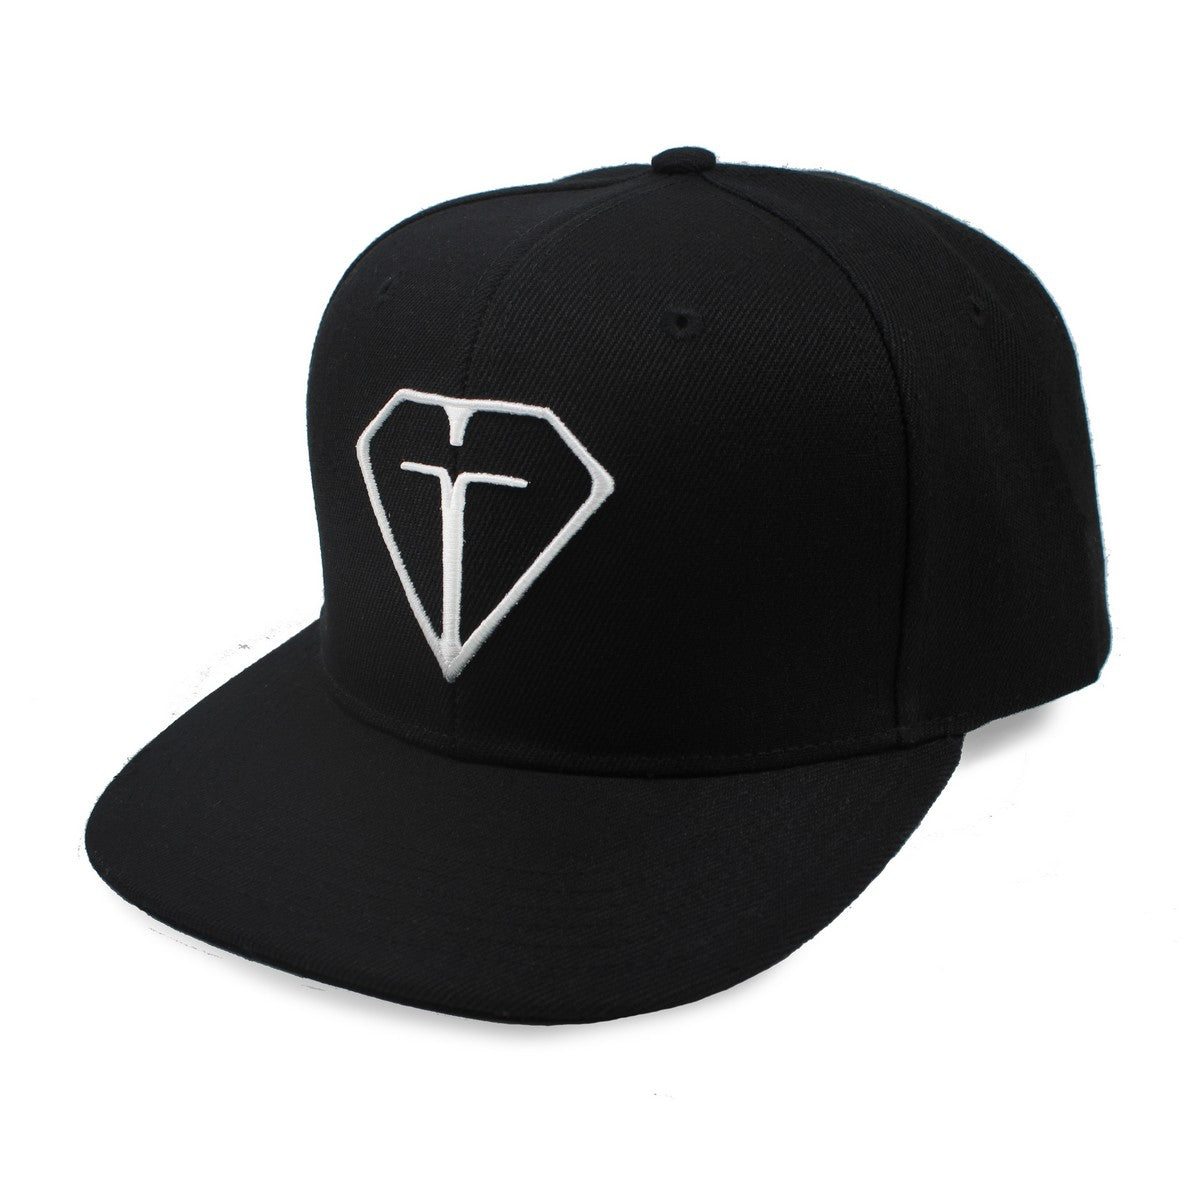 Black baseball cap with iconic Diamond Logo